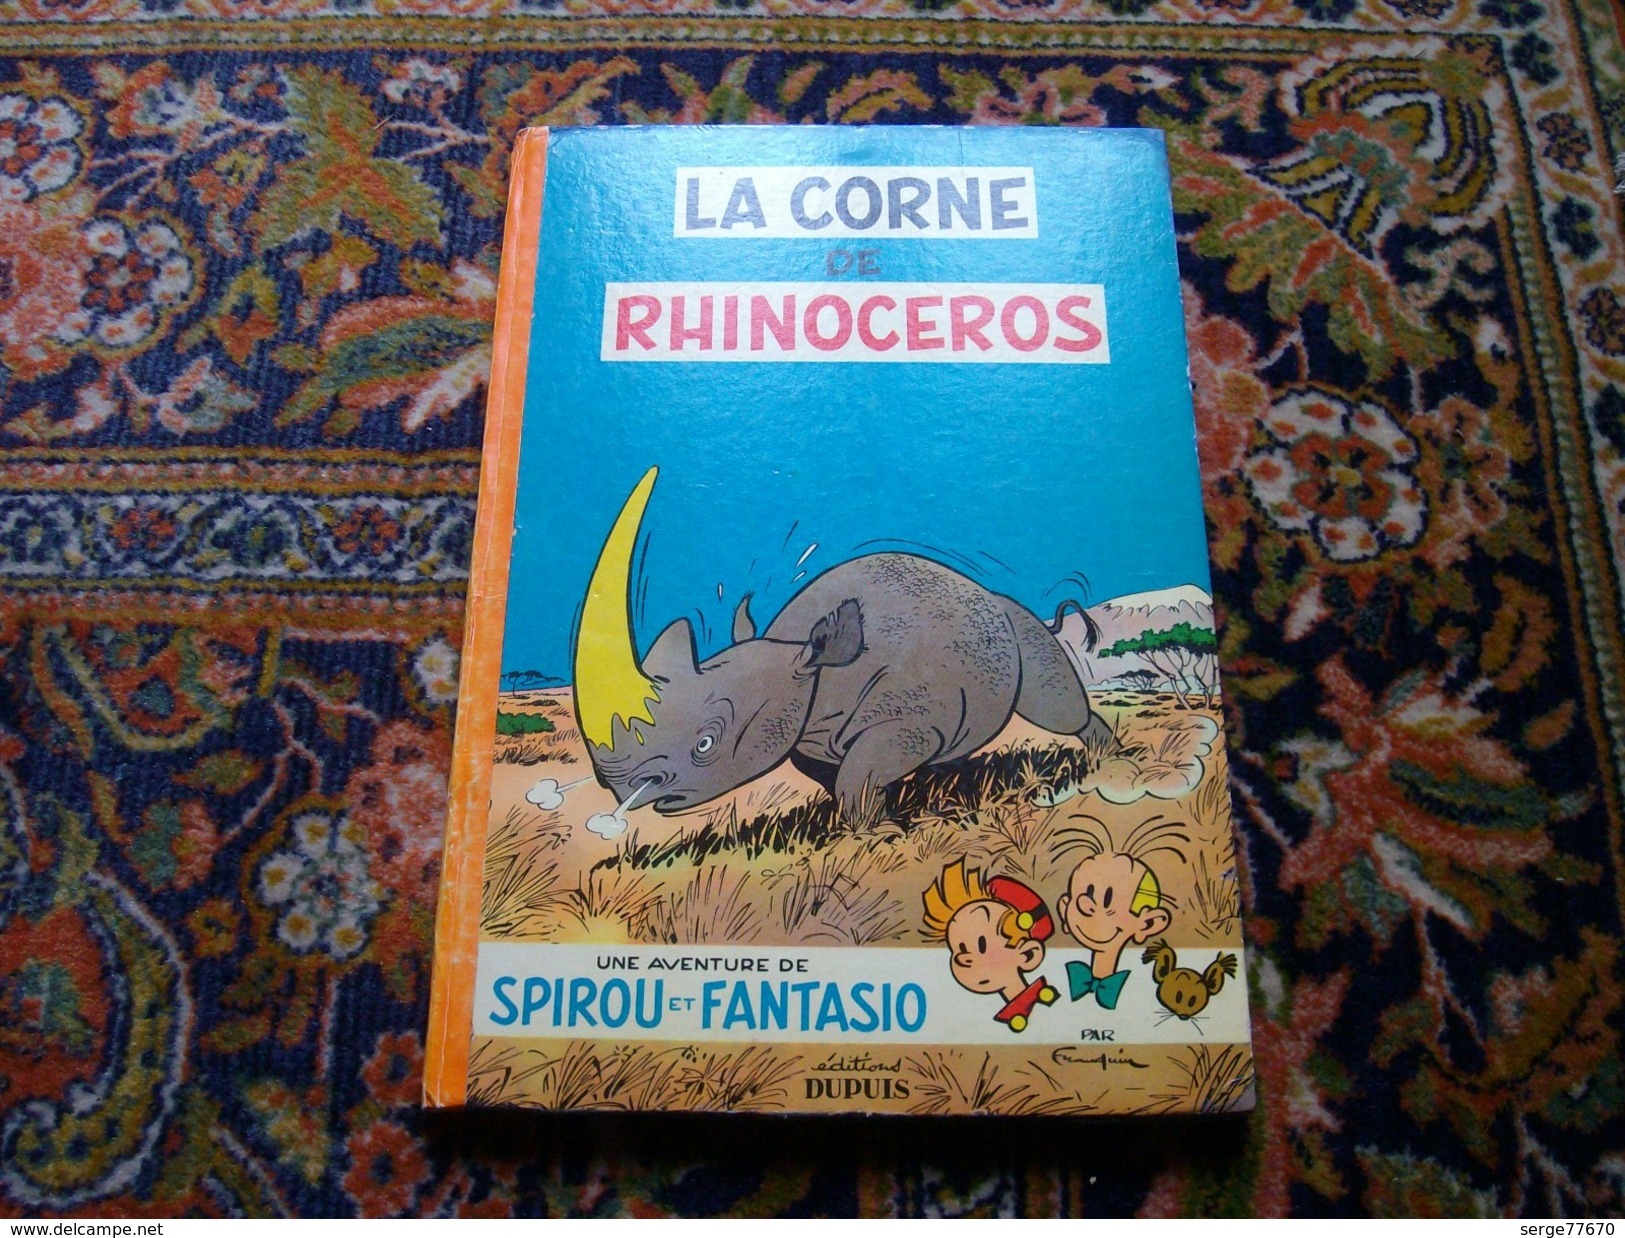 Spirou Et Fantasio Franquin La Corne De Rhinocéros 1955 Turbot-rhino édition Originale Française Eo Dupuis - Spirou Et Fantasio